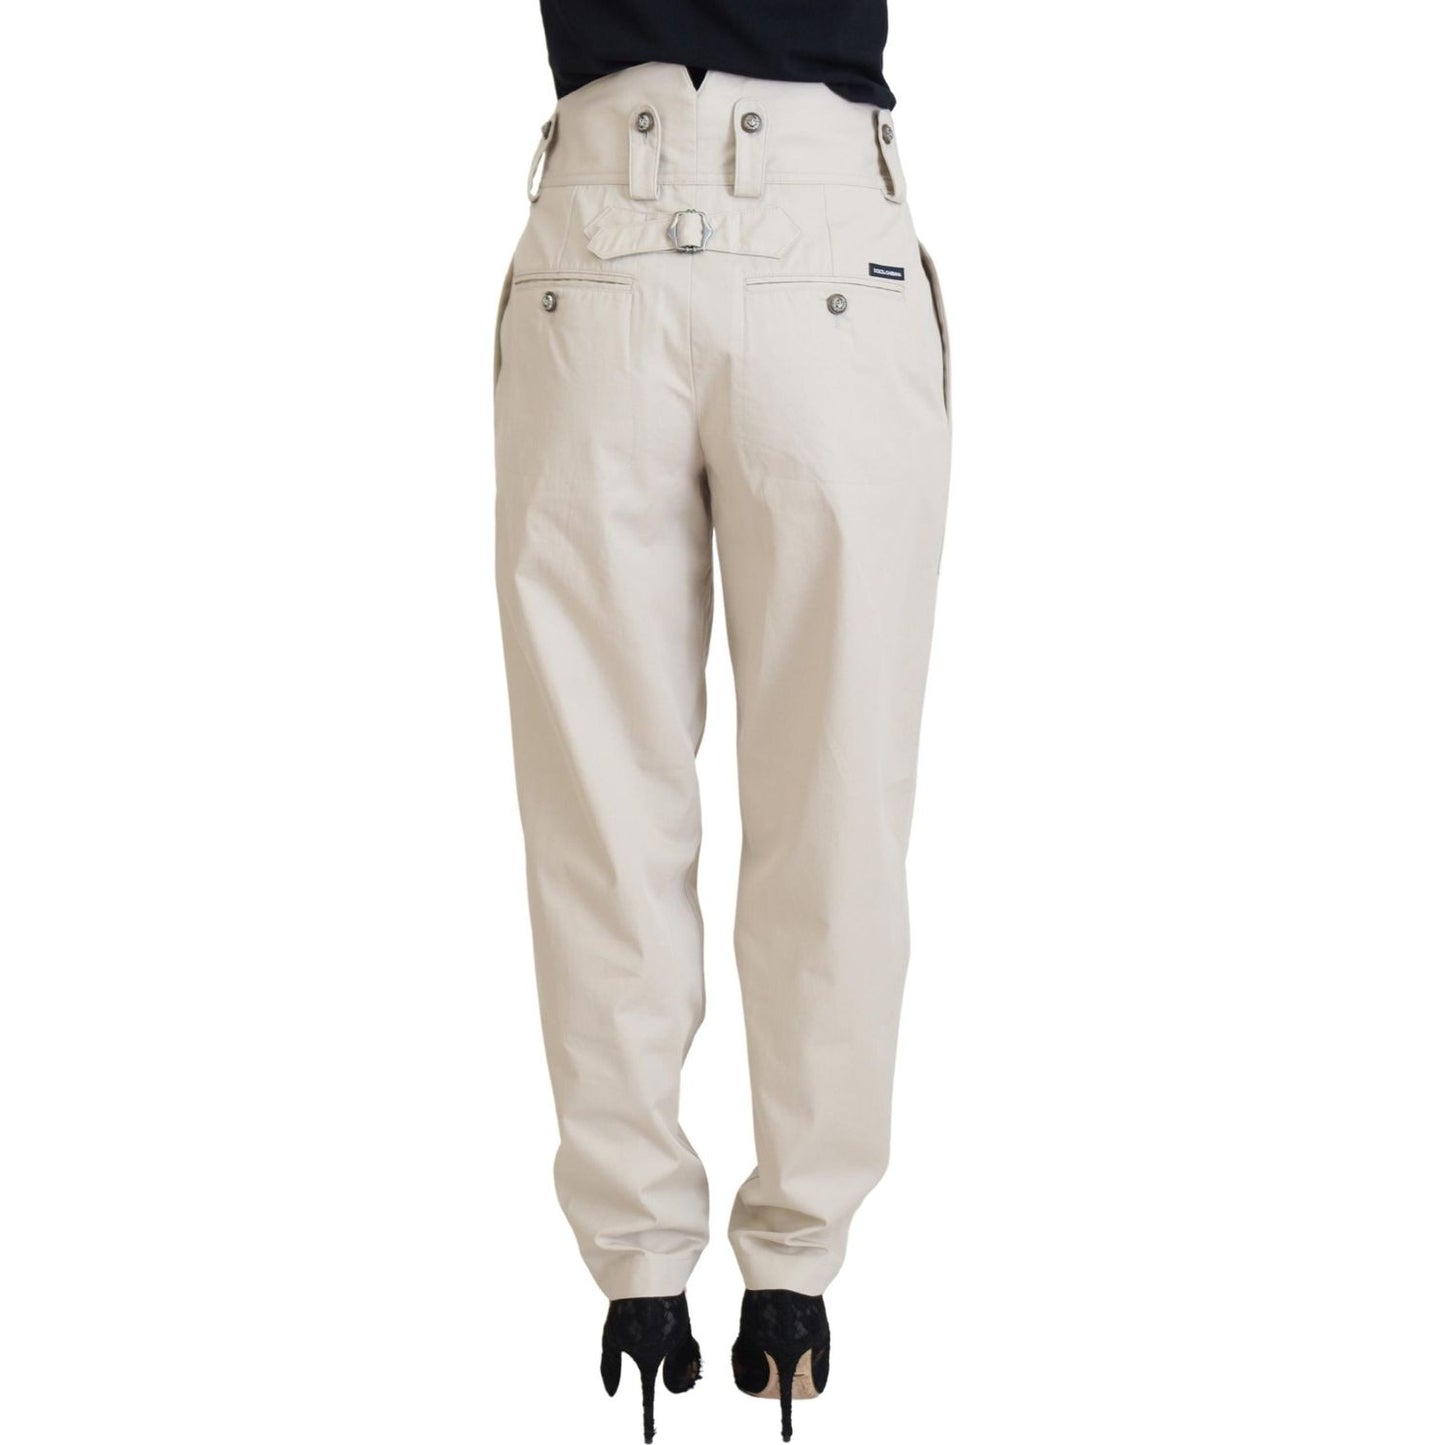 Dolce & Gabbana Chic Beige Cotton Trousers for Elegant Comfort beige-high-waist-women-pants IMG_3136-scaled-9759cba0-bac.jpg